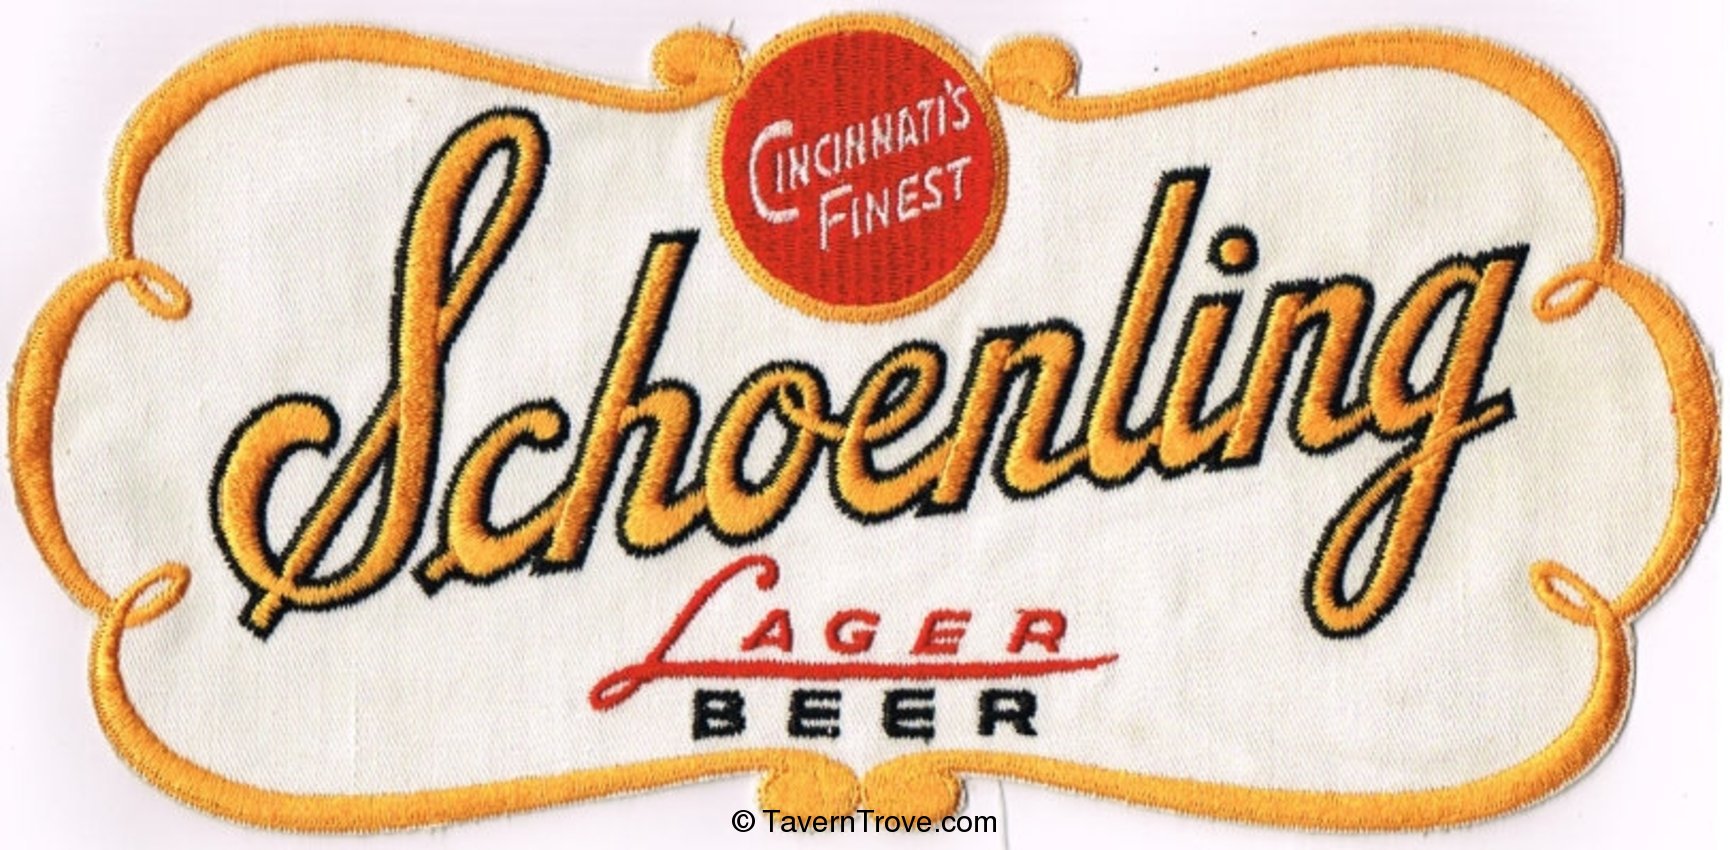 Schoenling Beer Back Patch